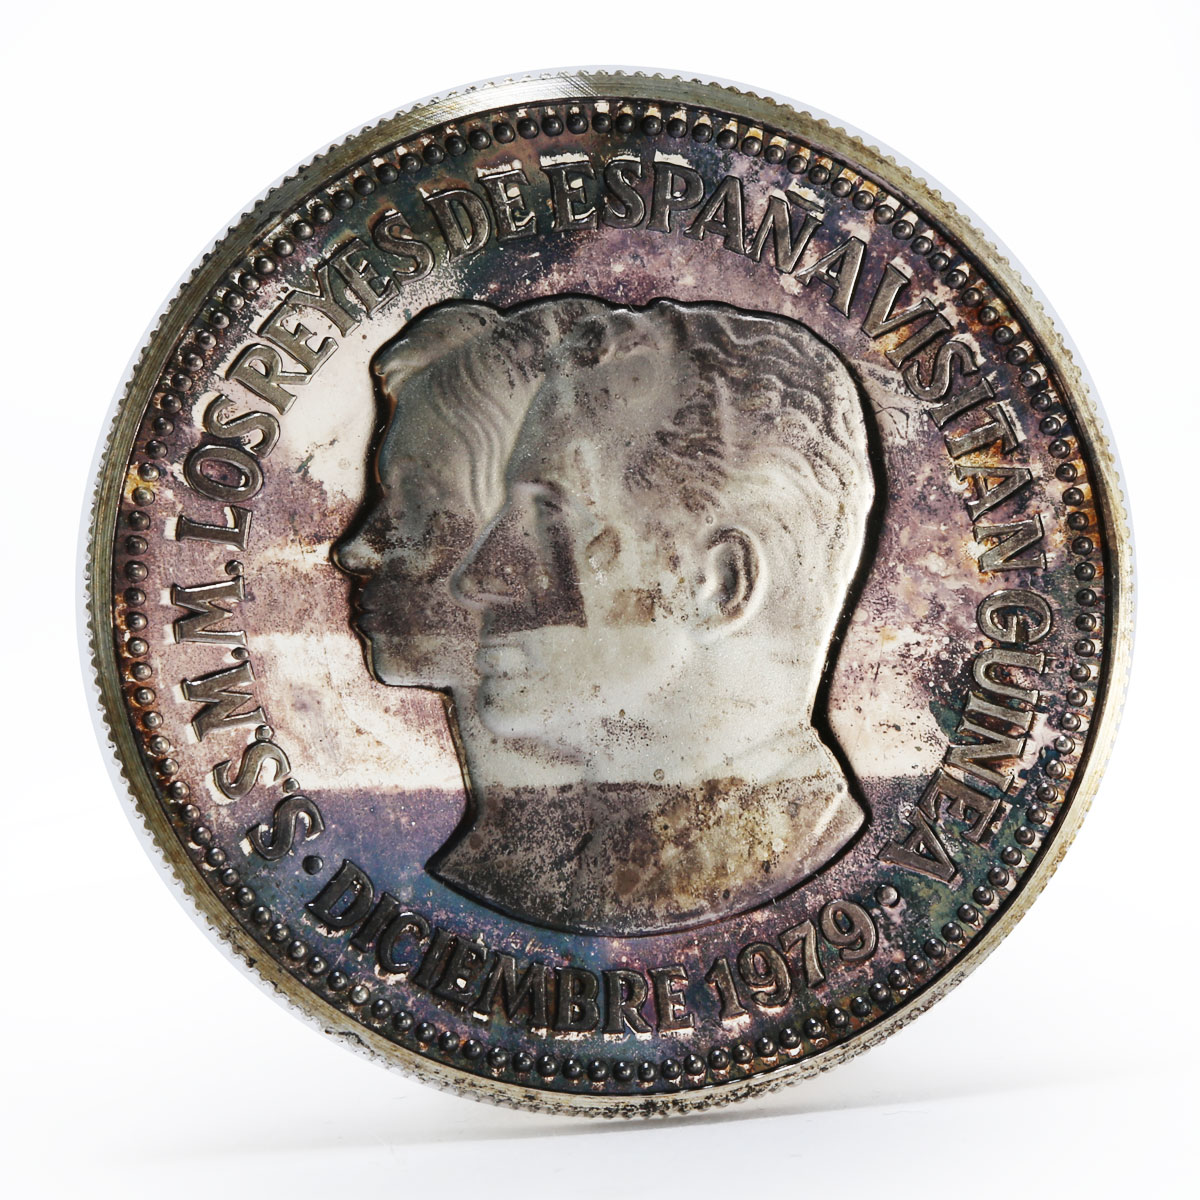 Equatorial Guinea 2000 bipkwele King and Queen prueba coin 1979